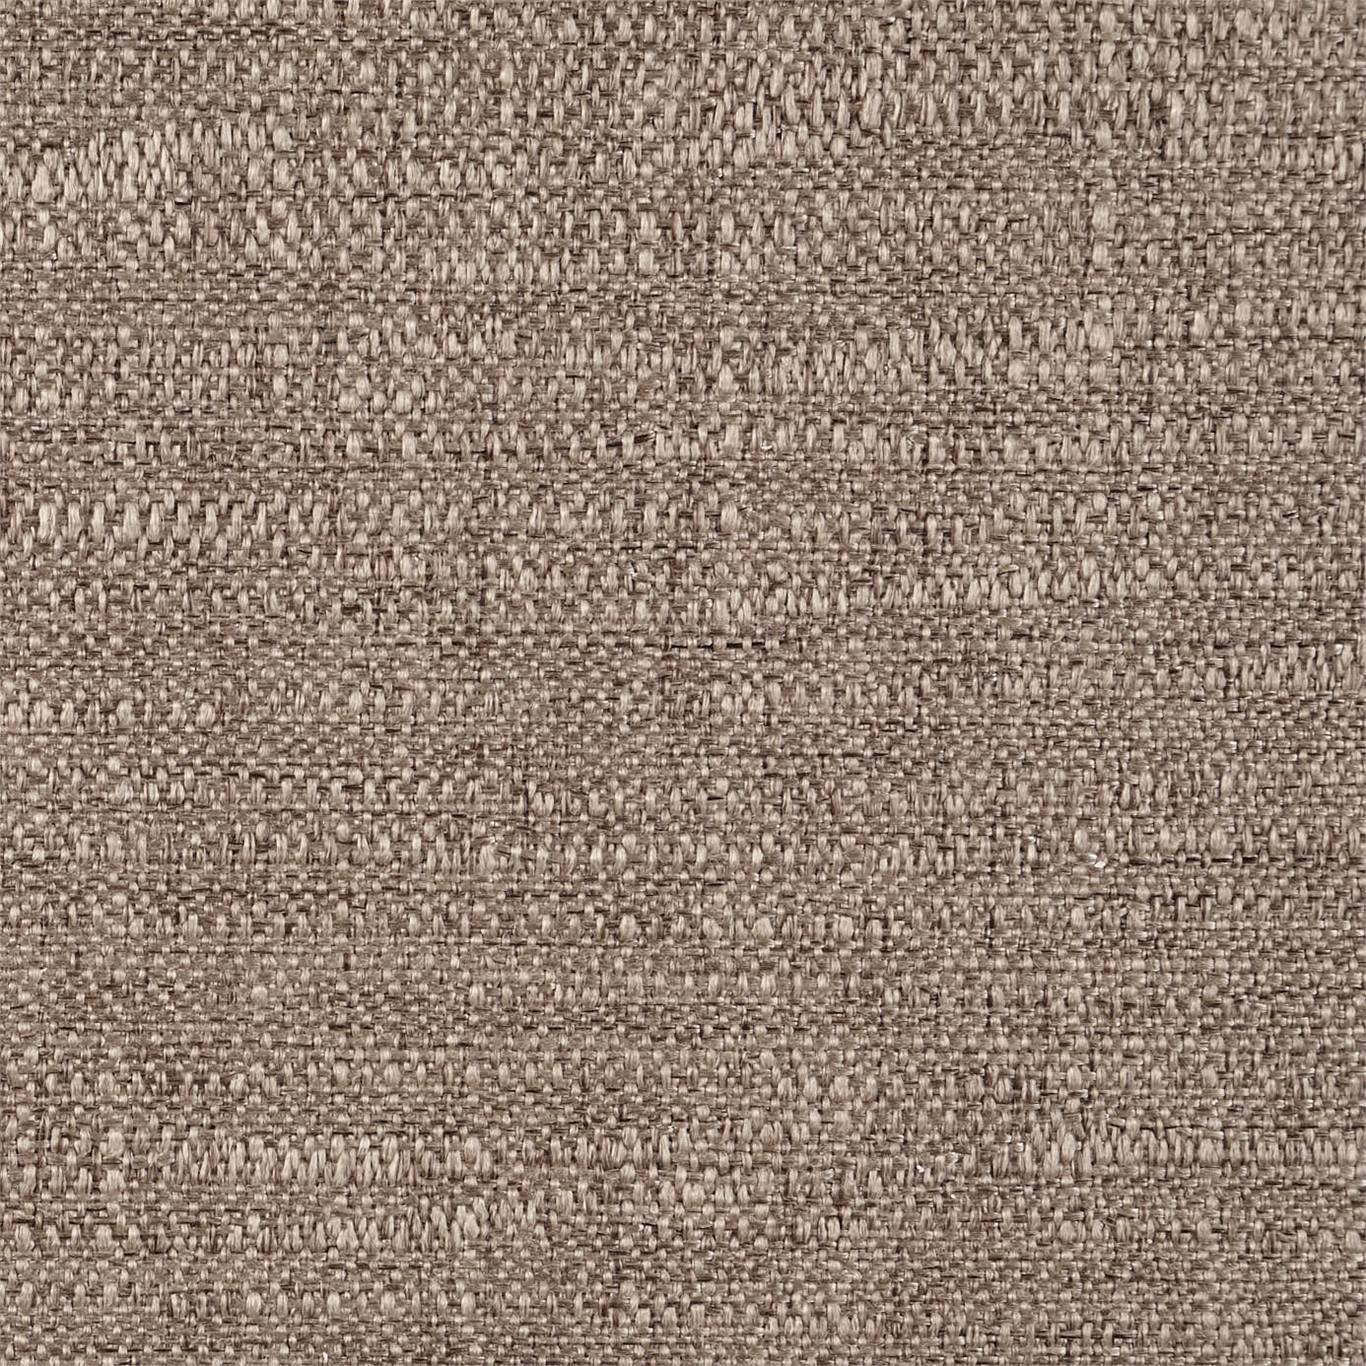 Extensive Wicker Fabric by HAR